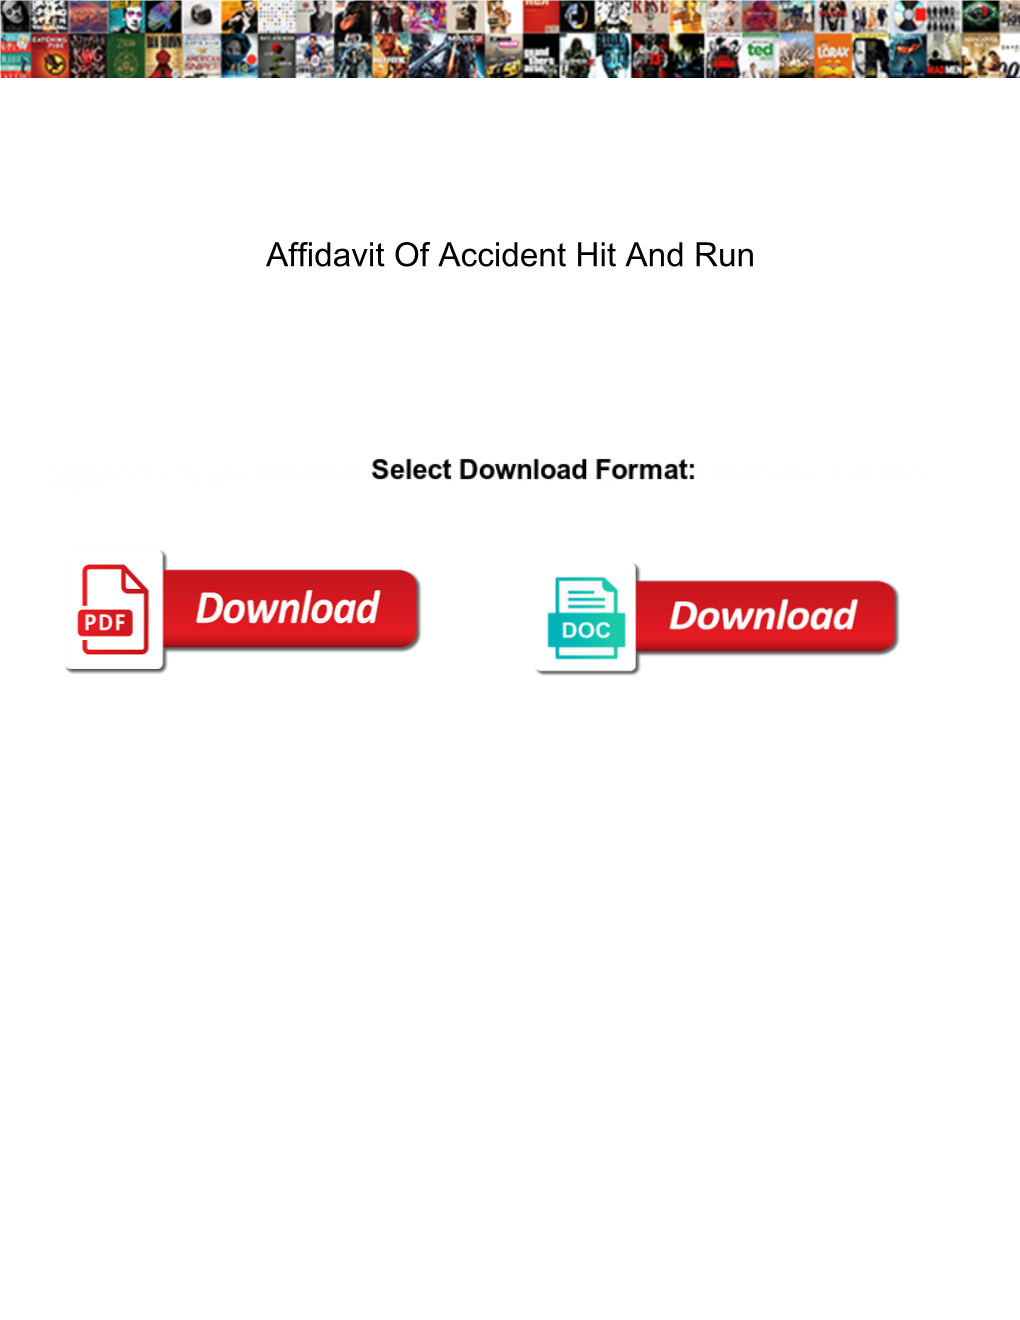 Affidavit of Accident Hit and Run